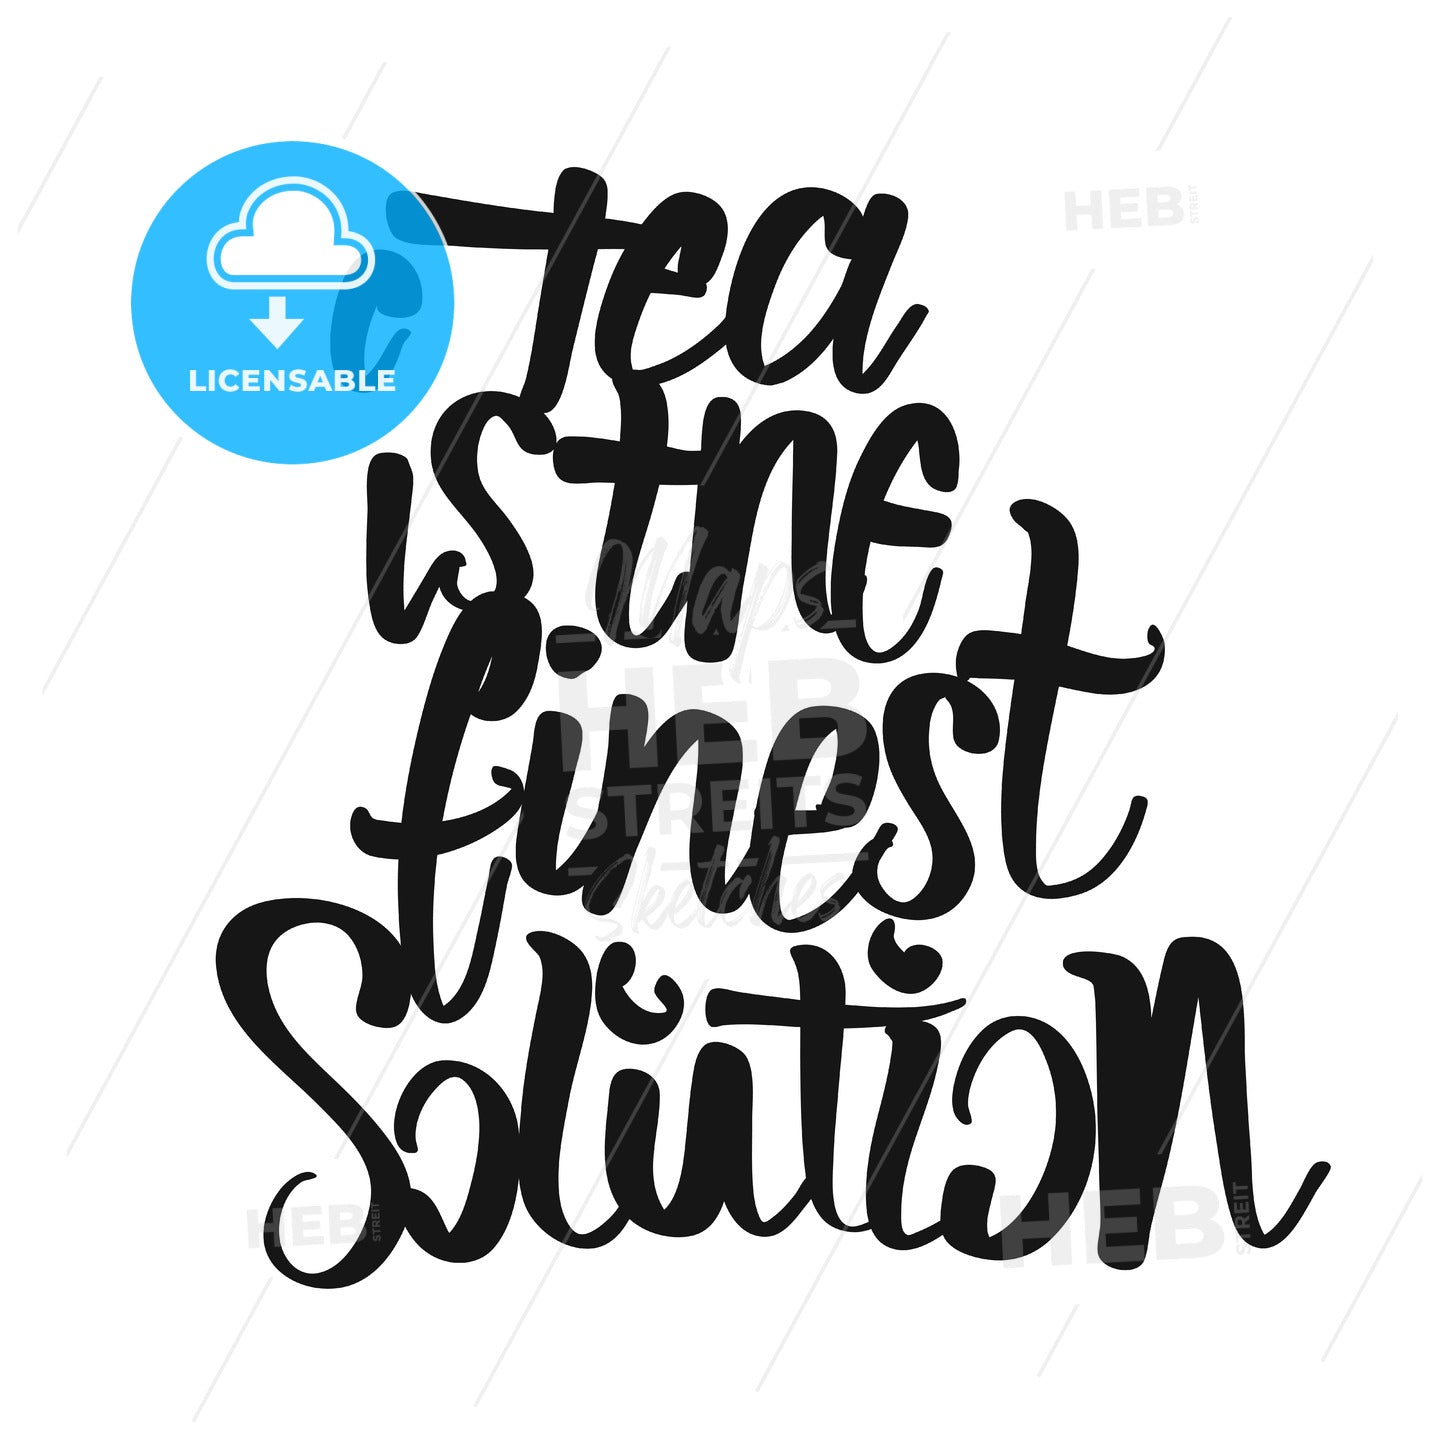 Tea Is The Fines Solution handwritten lettering – instant download